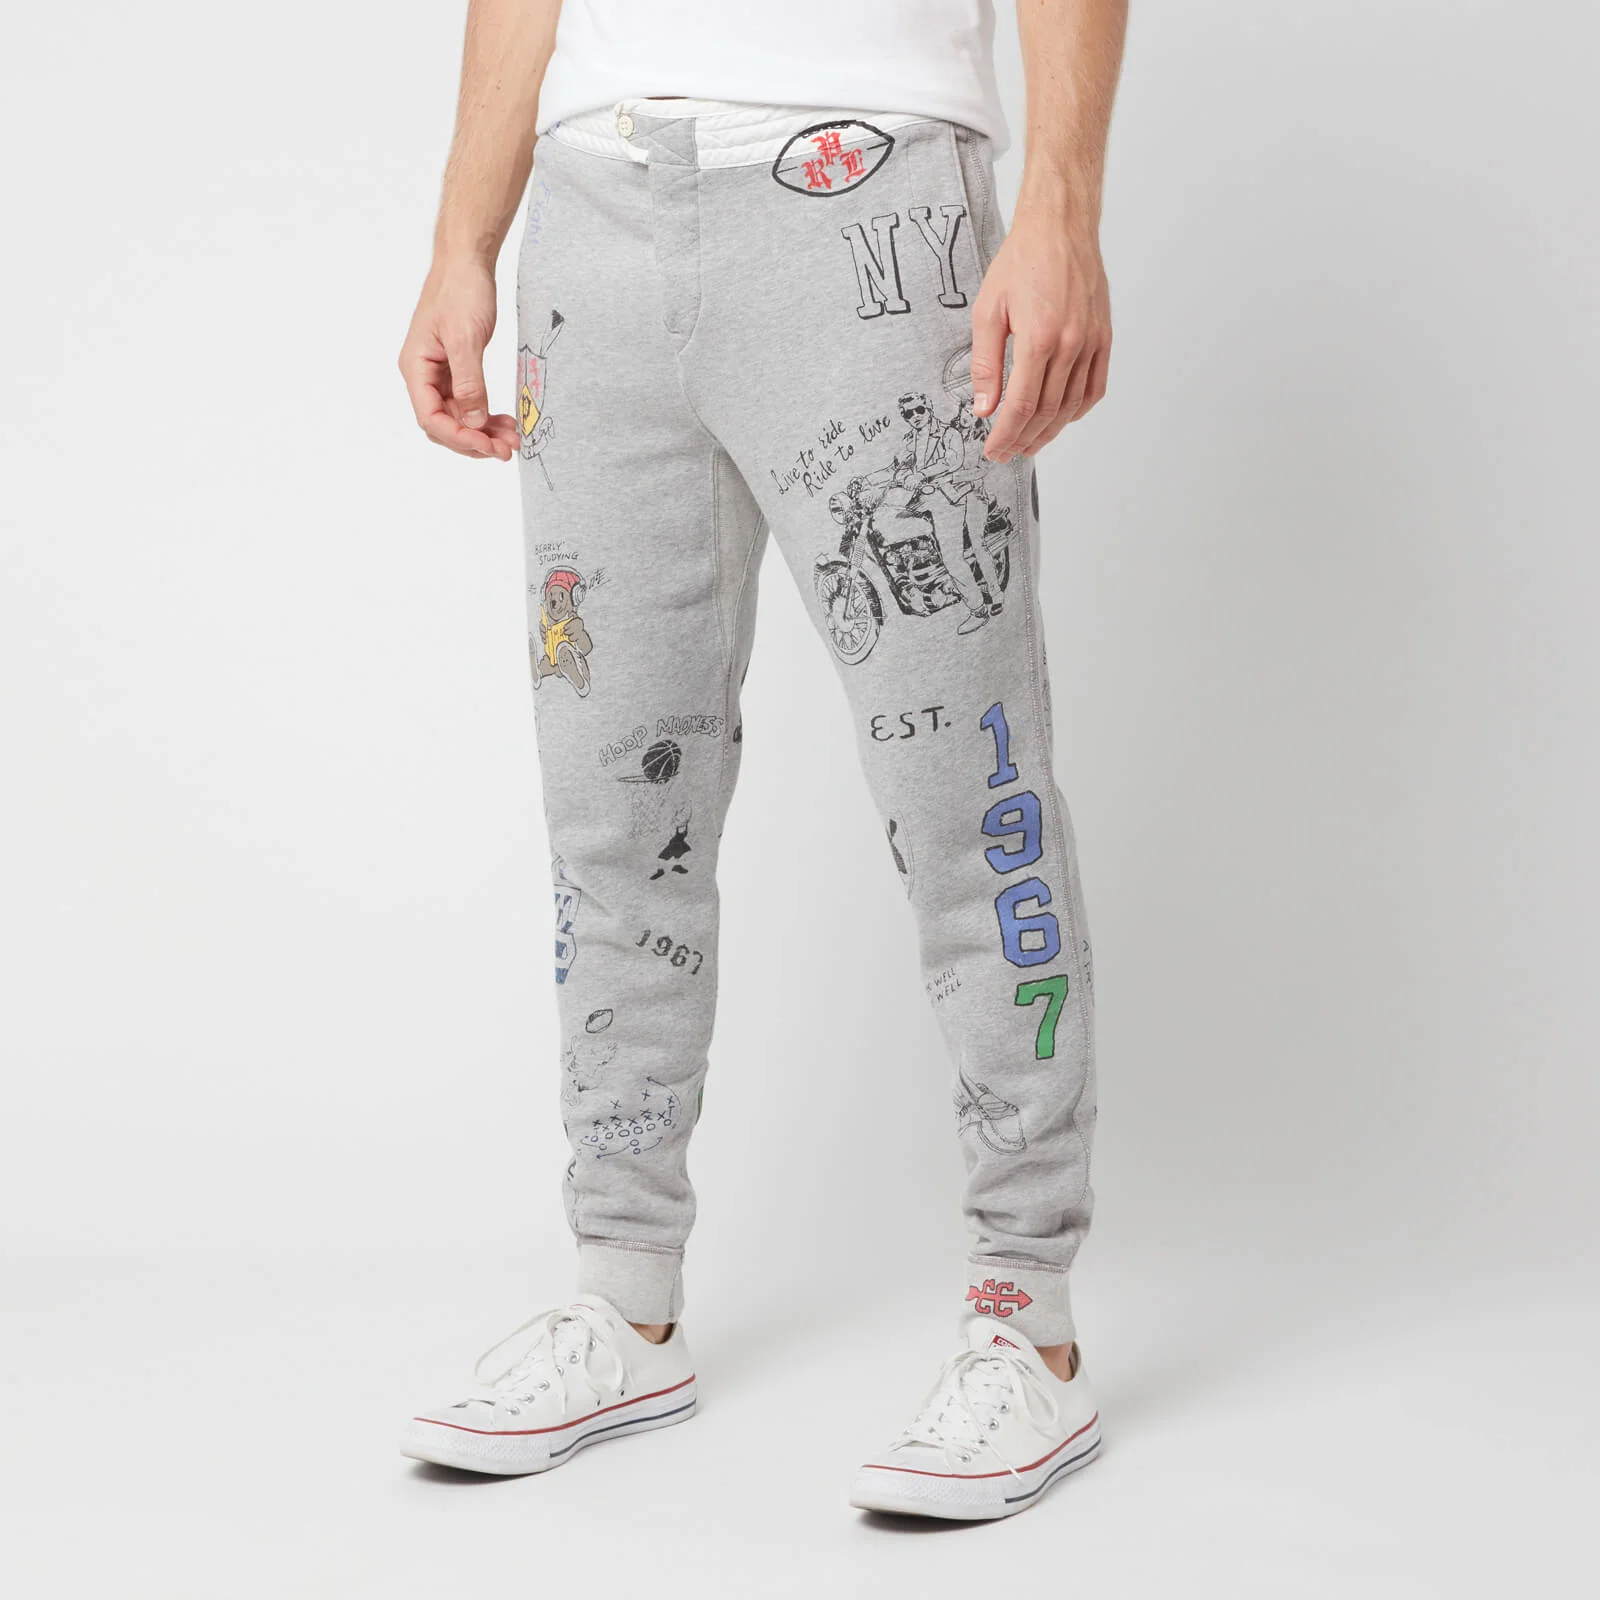 Polo Ralph Lauren Men's Graffiti College Sweatpants - Light Grey Heather Image 1